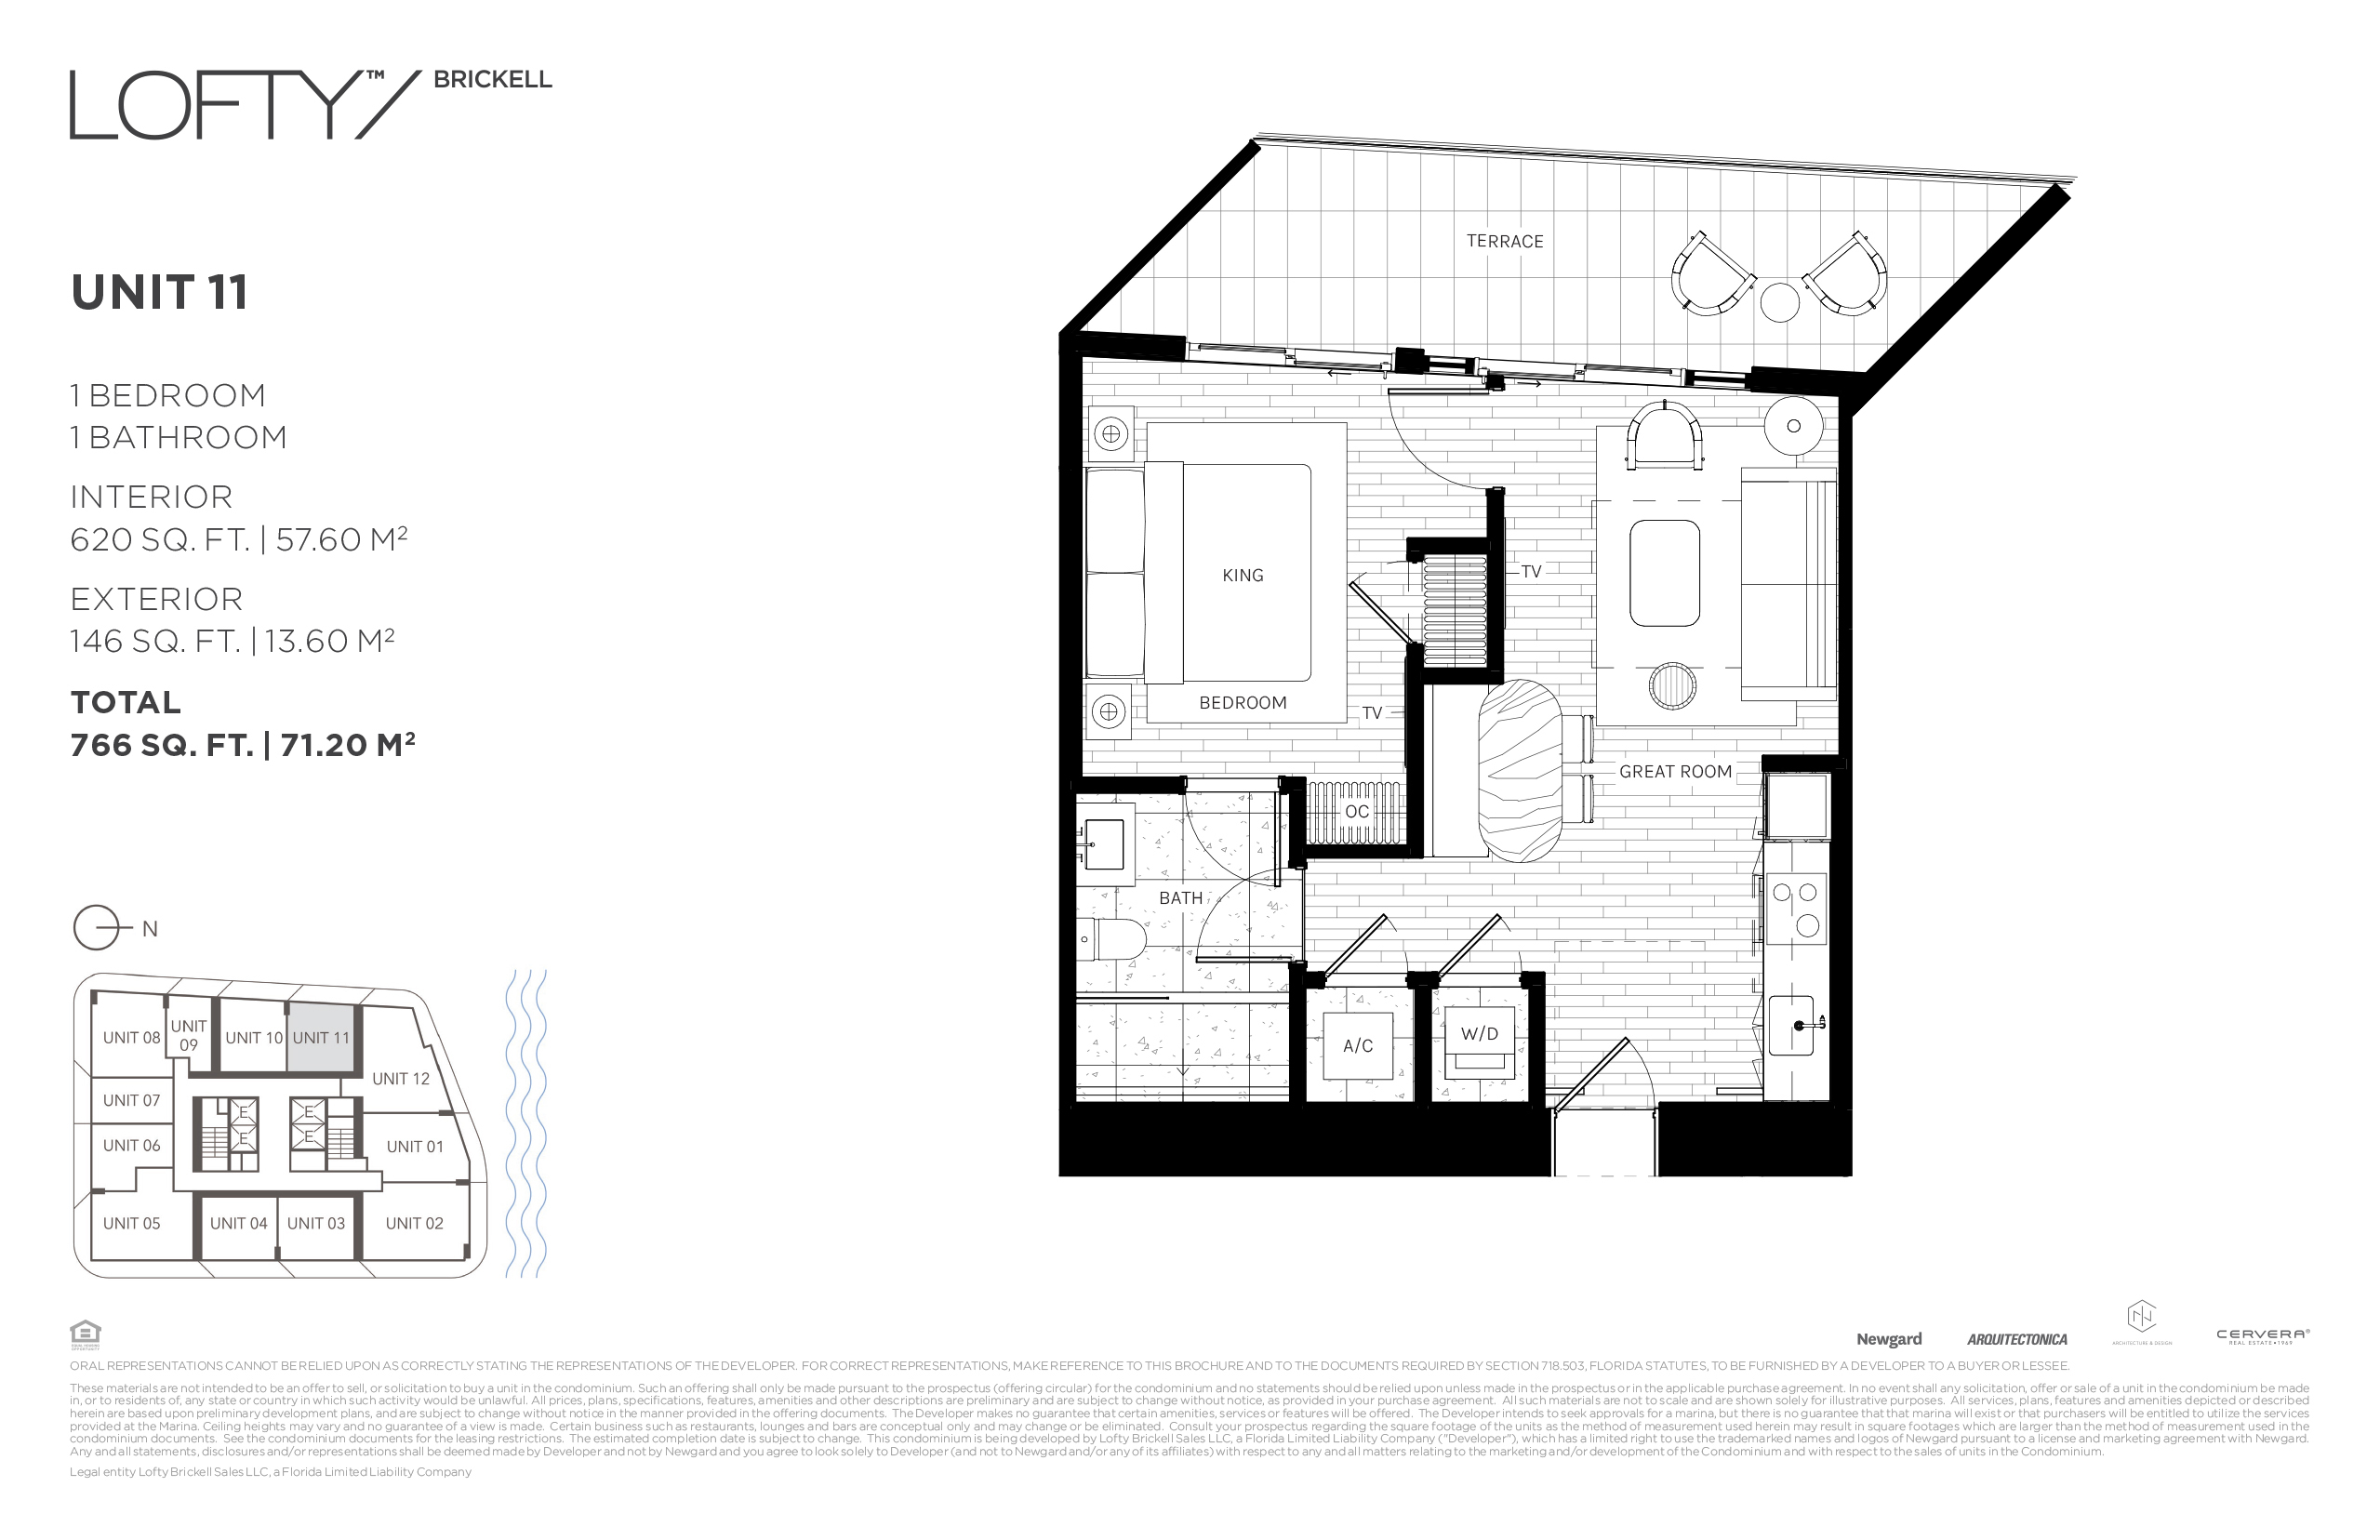 Floor Plan for Lofty Brickell Floorplans, Unit 11